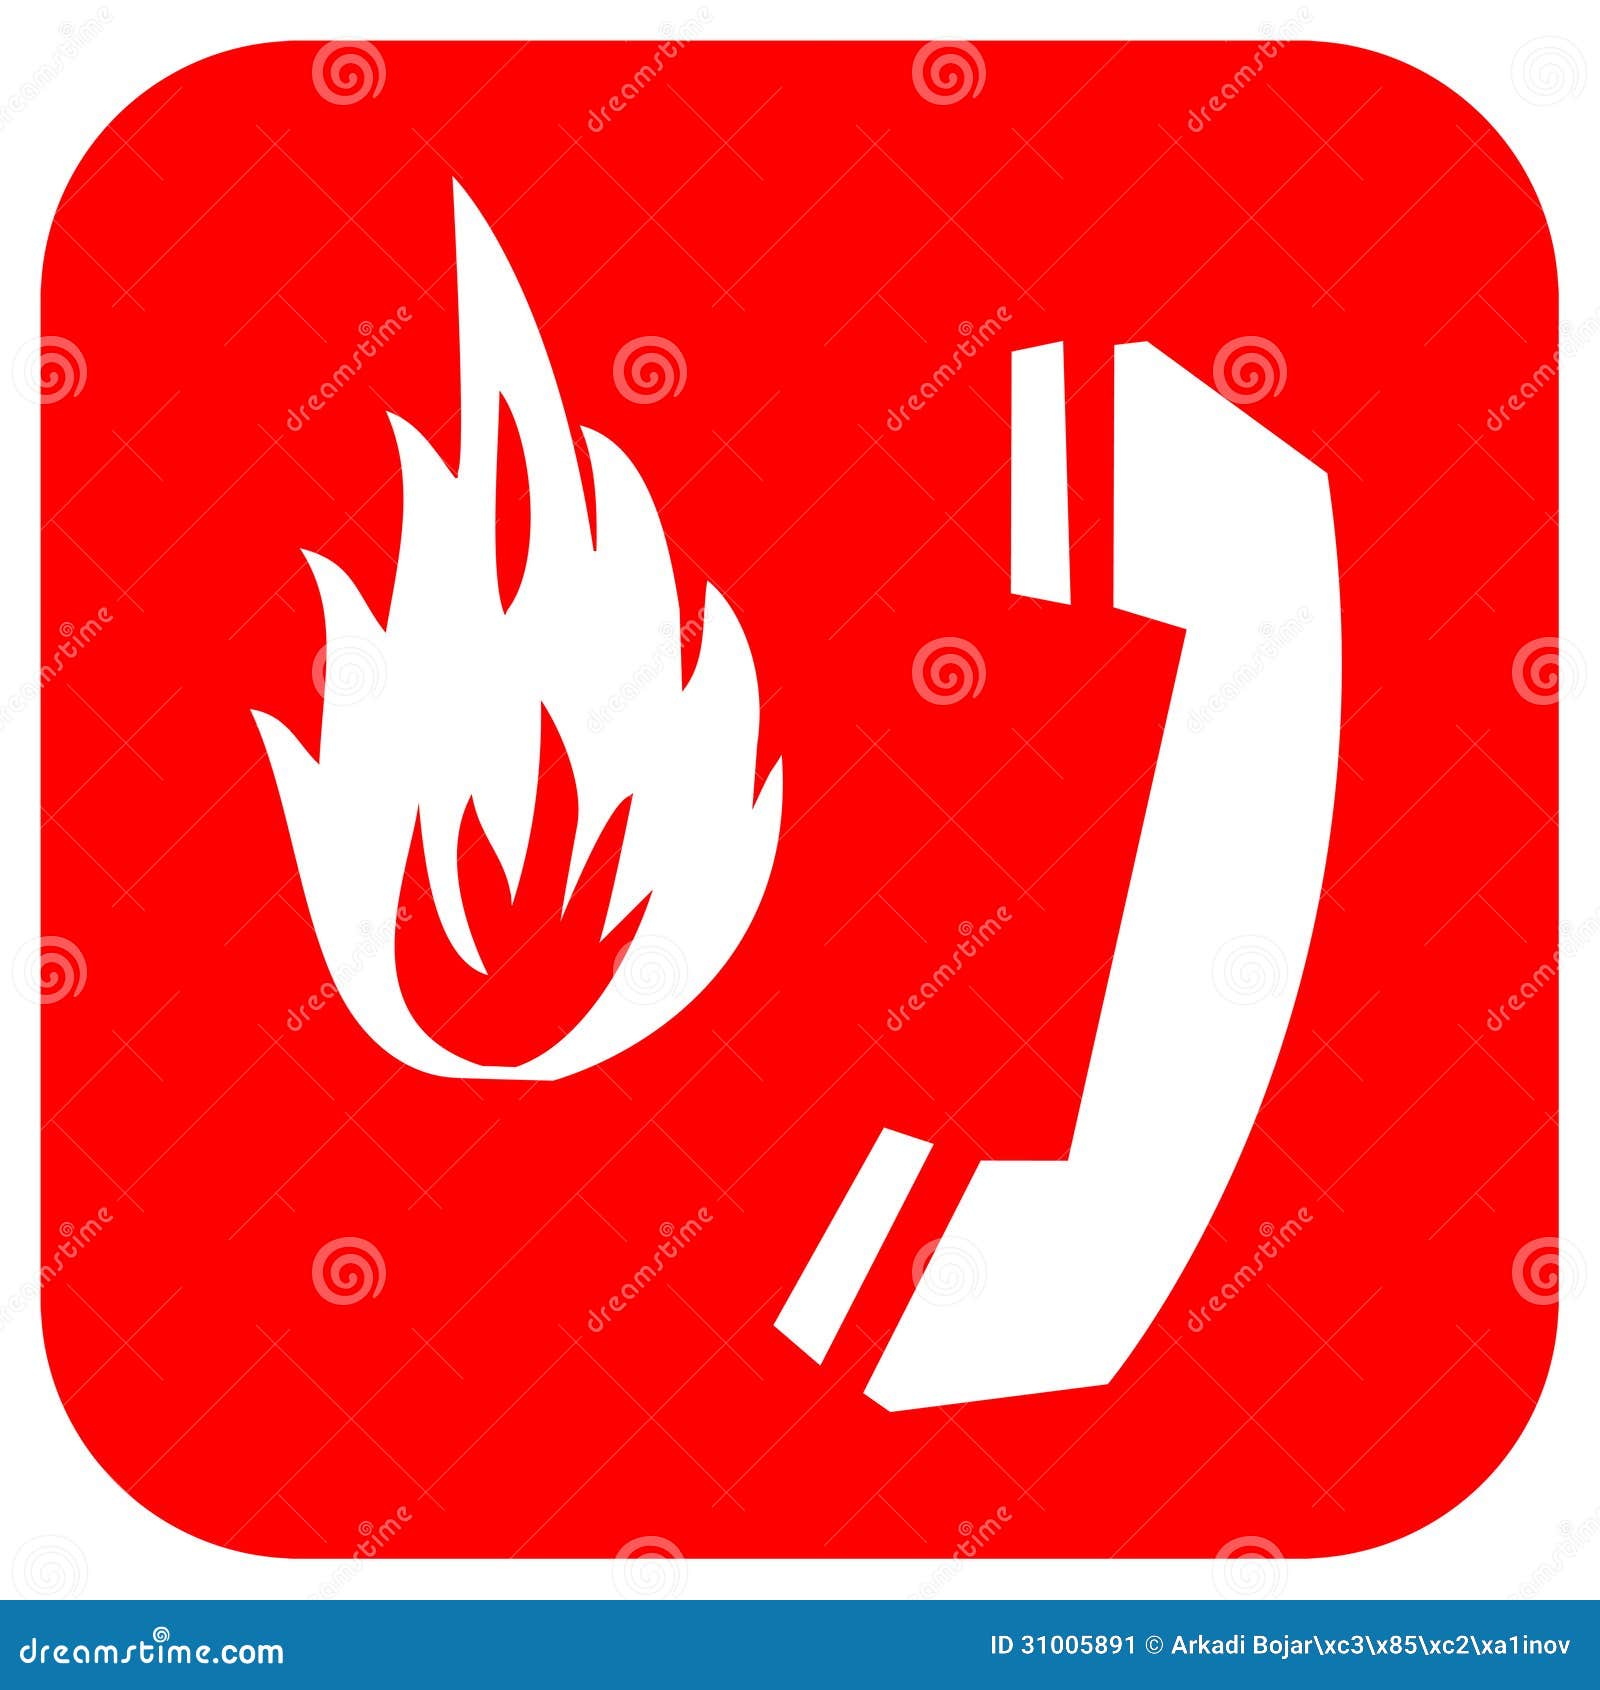 clip art of fire alarm - photo #44